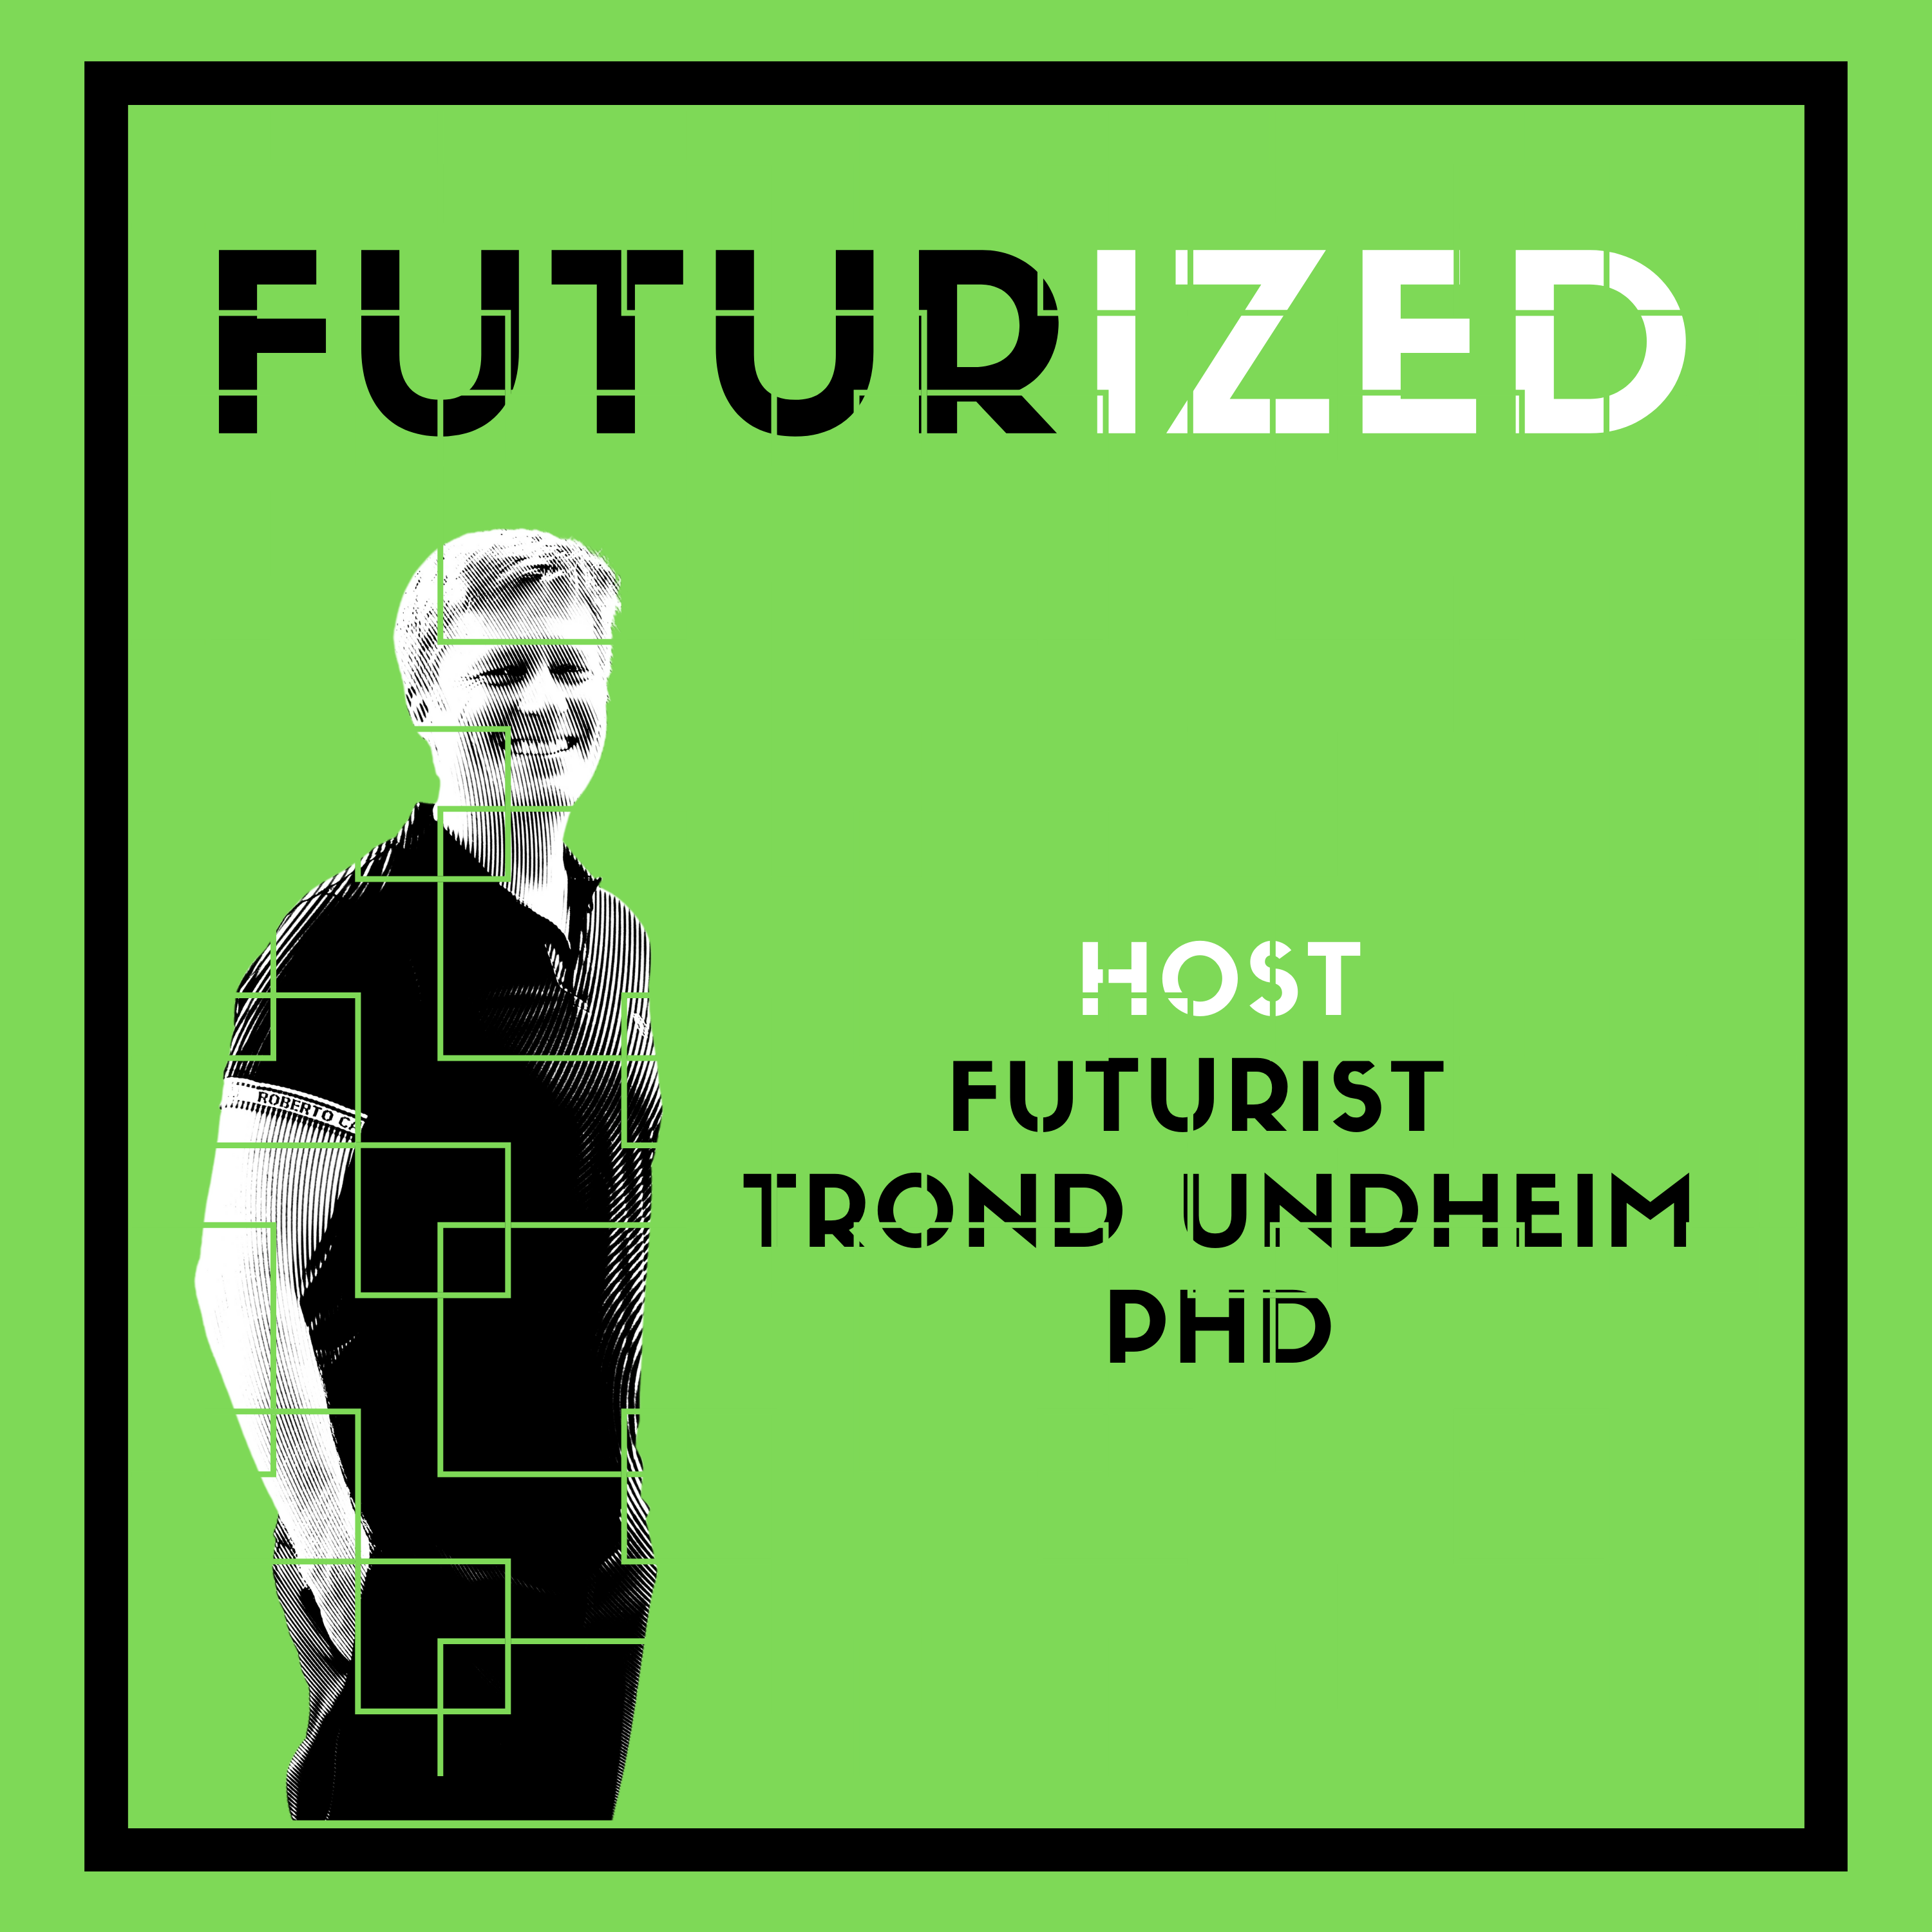 Futurized - thought leadership on the future